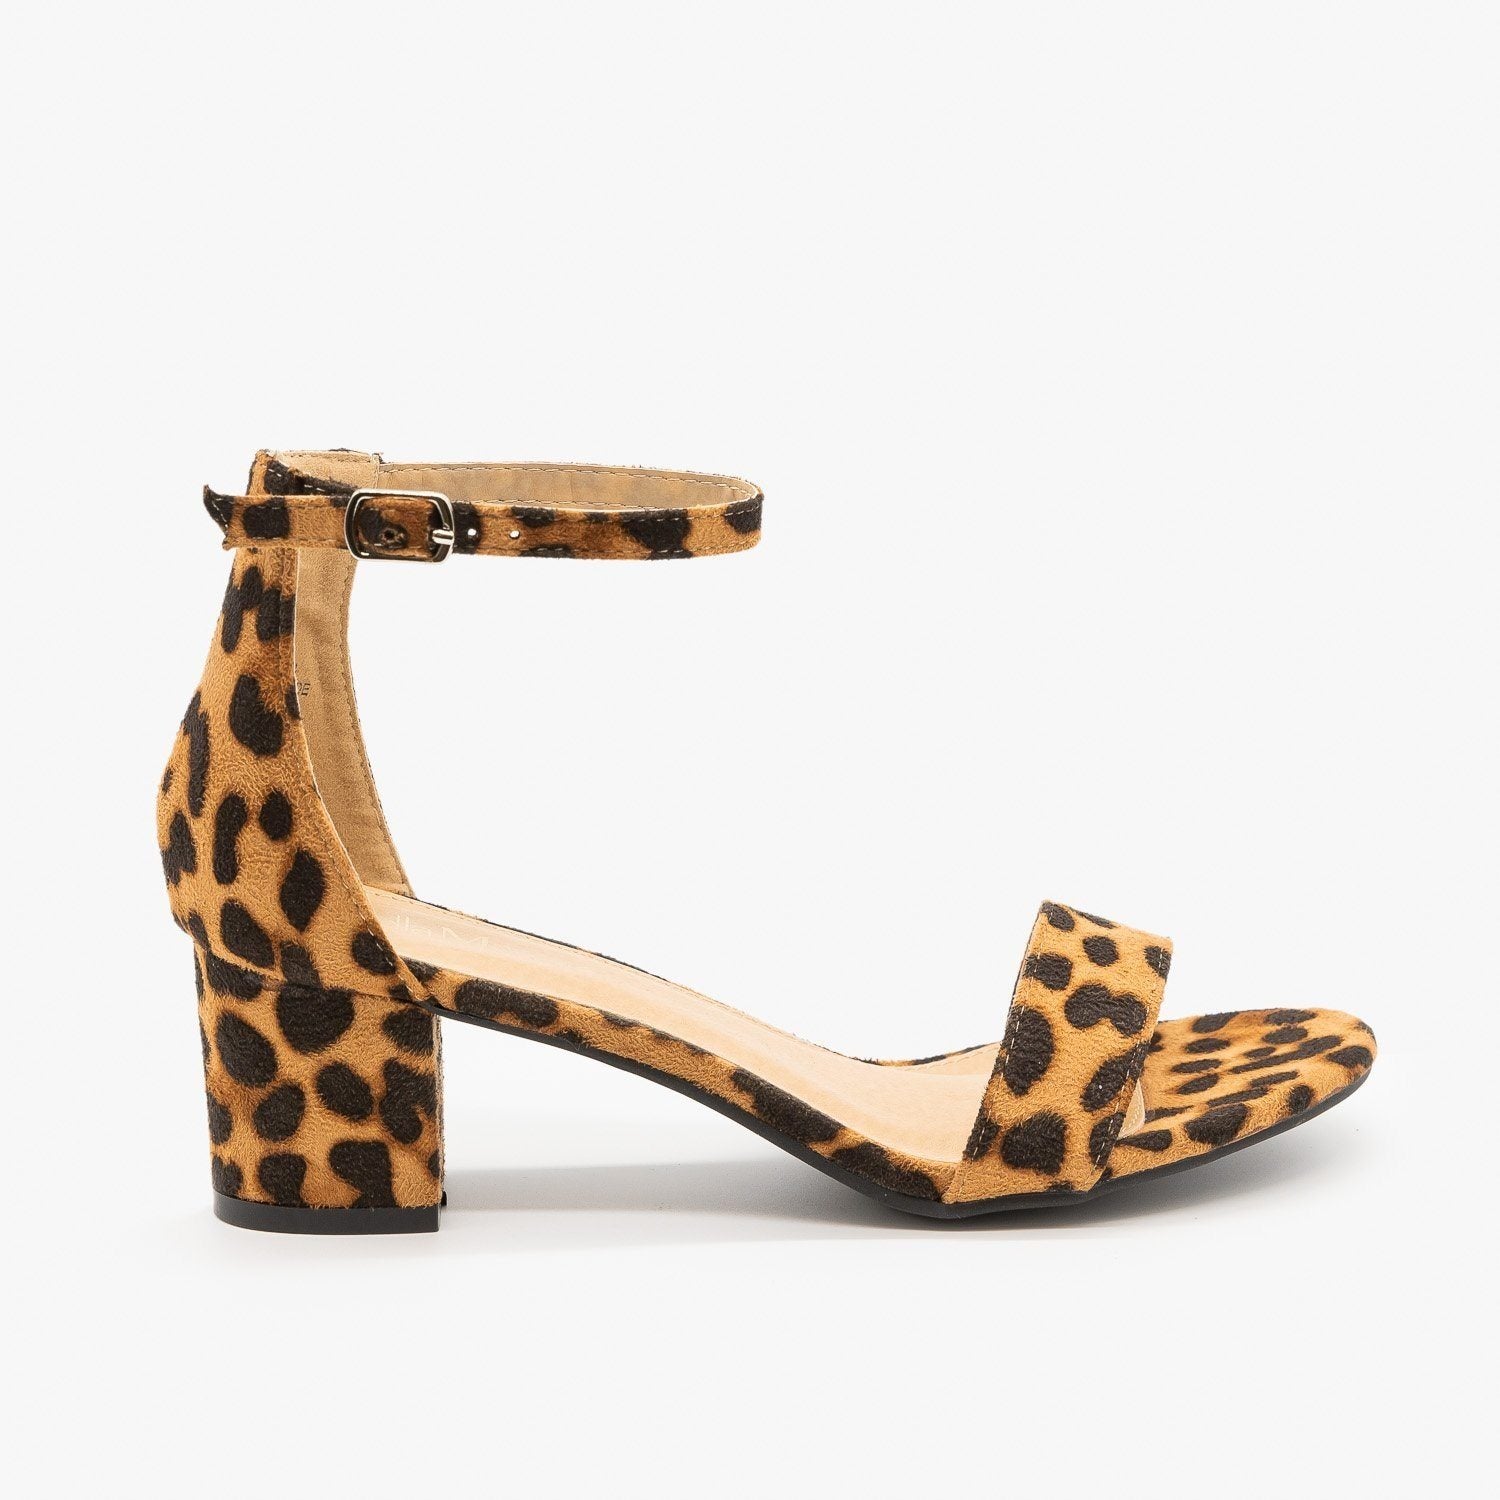 bella marie leopard shoes